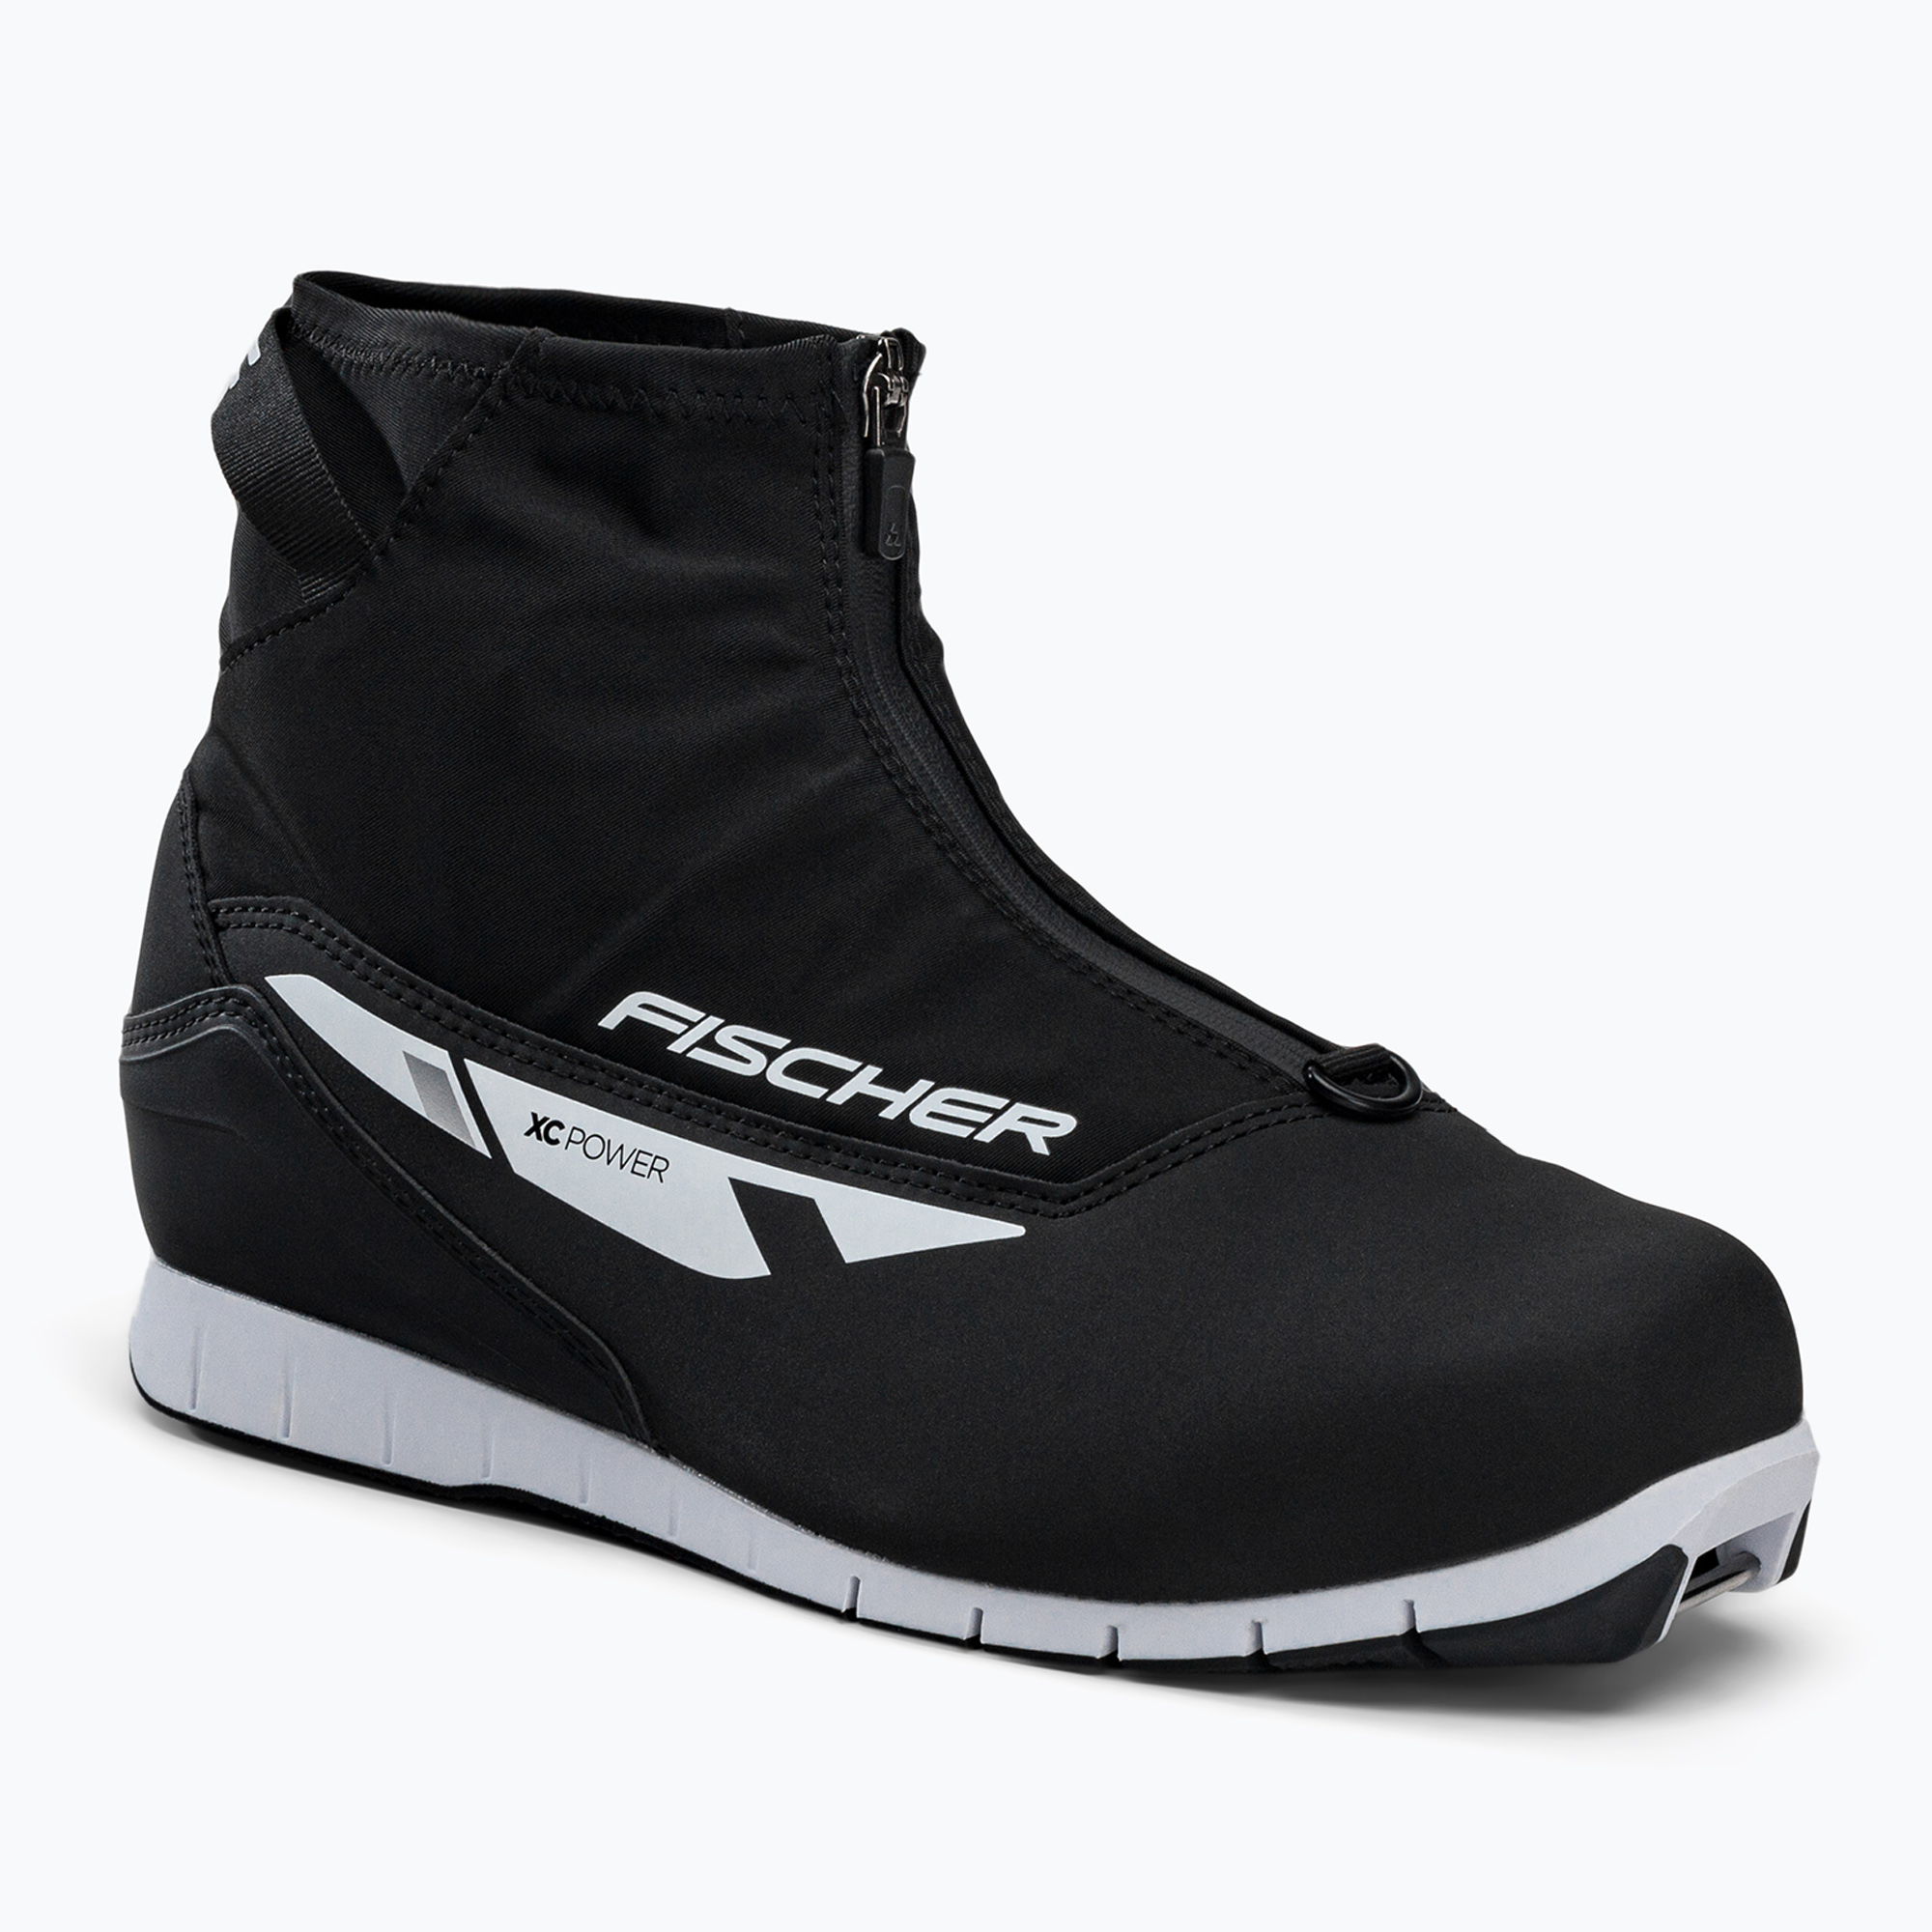 Topánky na bežecké lyžovanie Fischer XC Power čierno-biele S21122,41